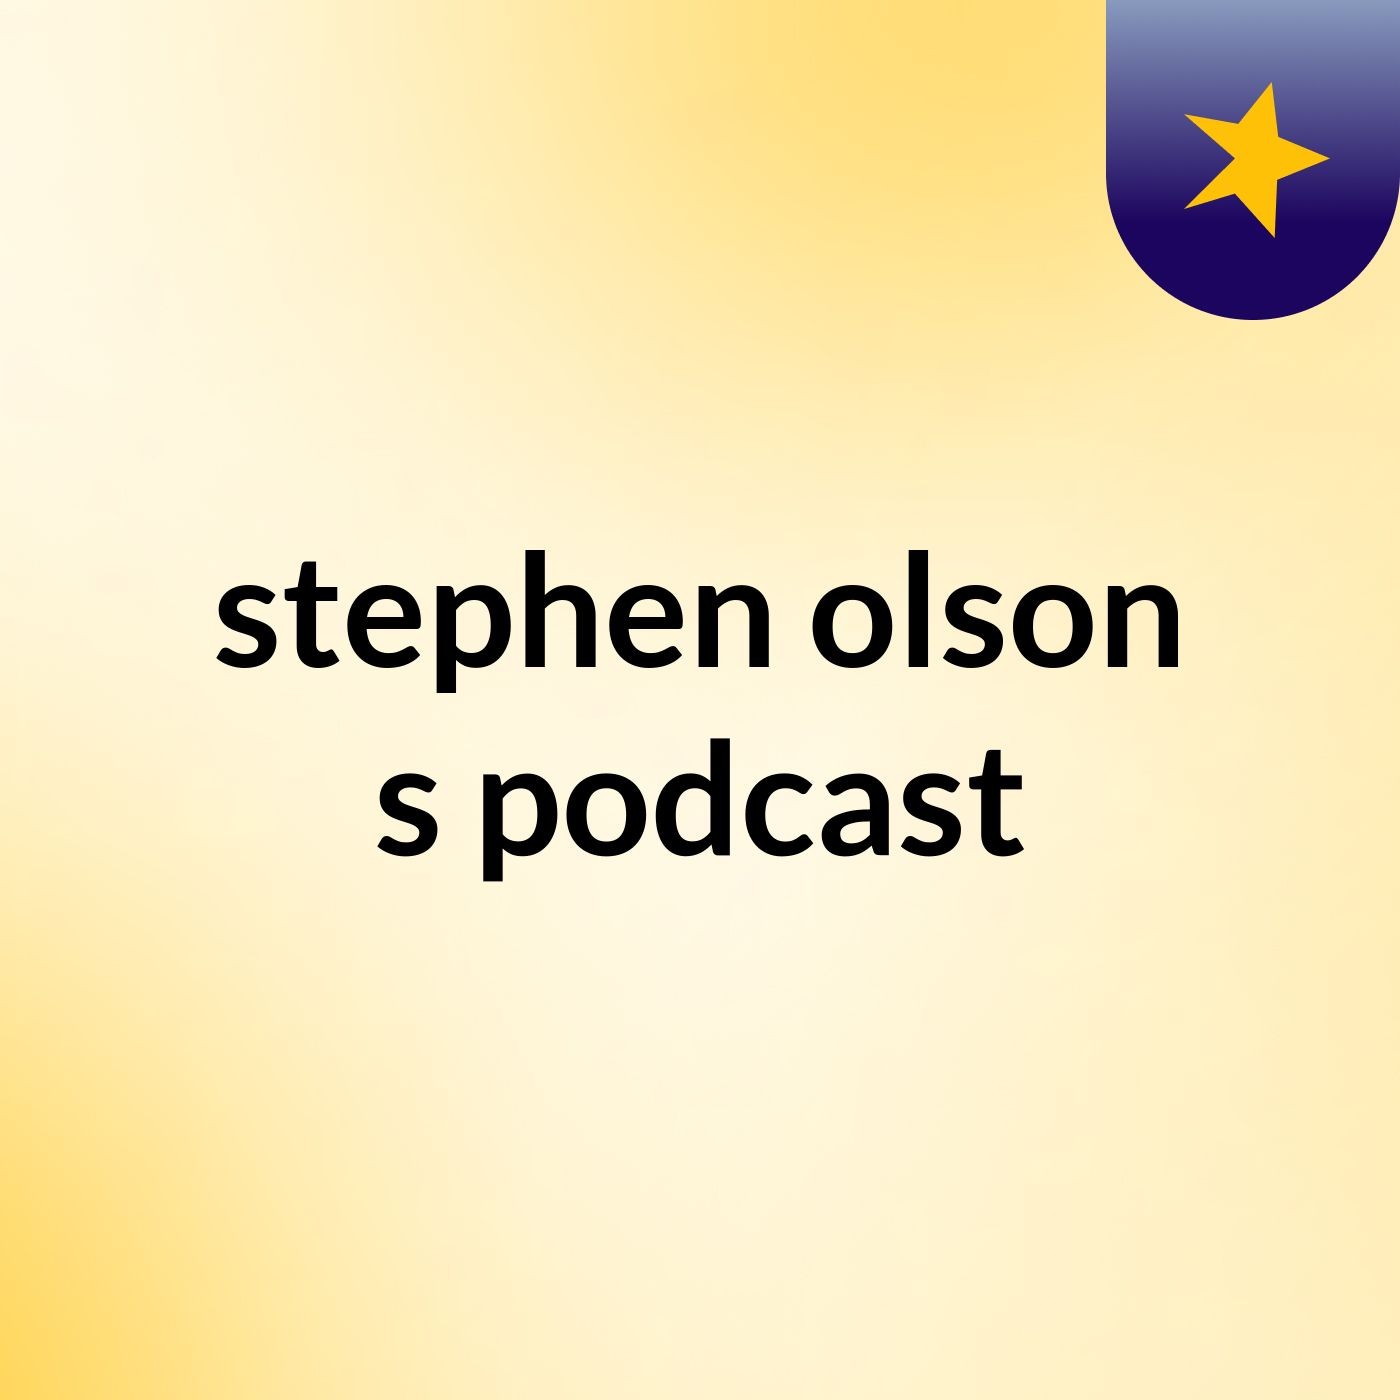 Episode 4 - stephen olson's podcast